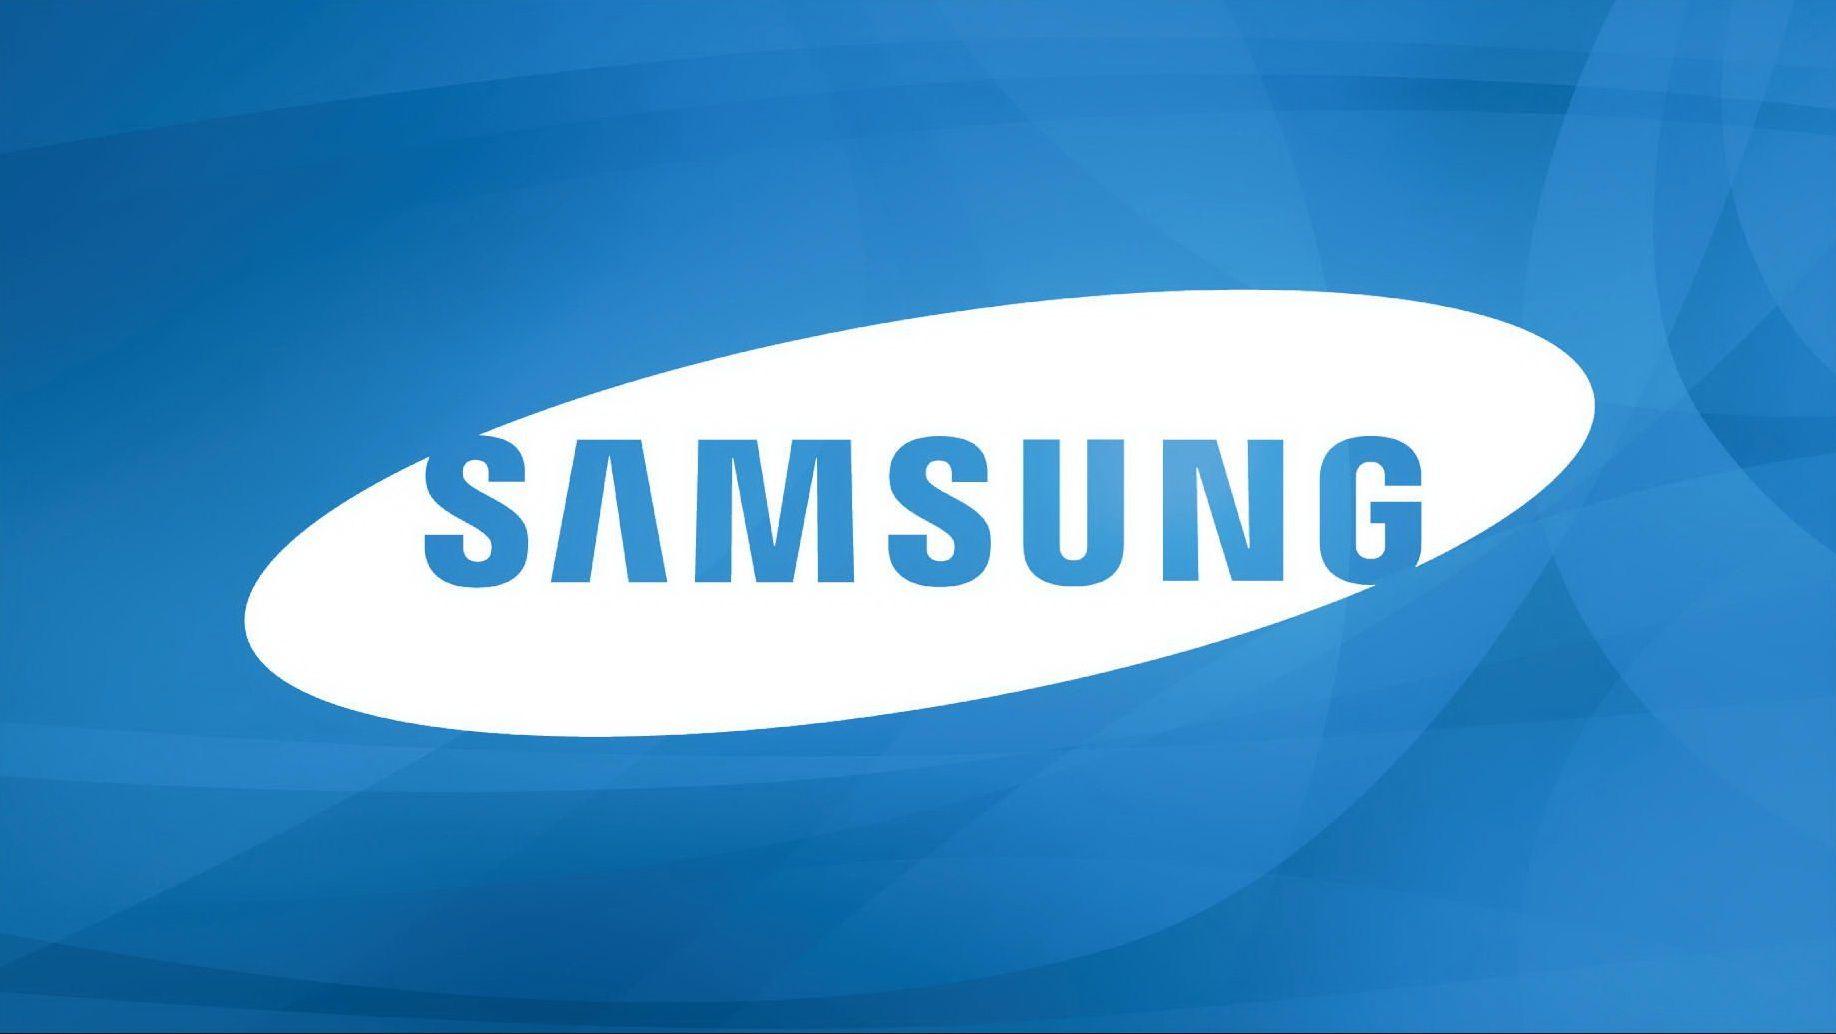 Samsung HD Wallpaper. Samsung Galaxy Image